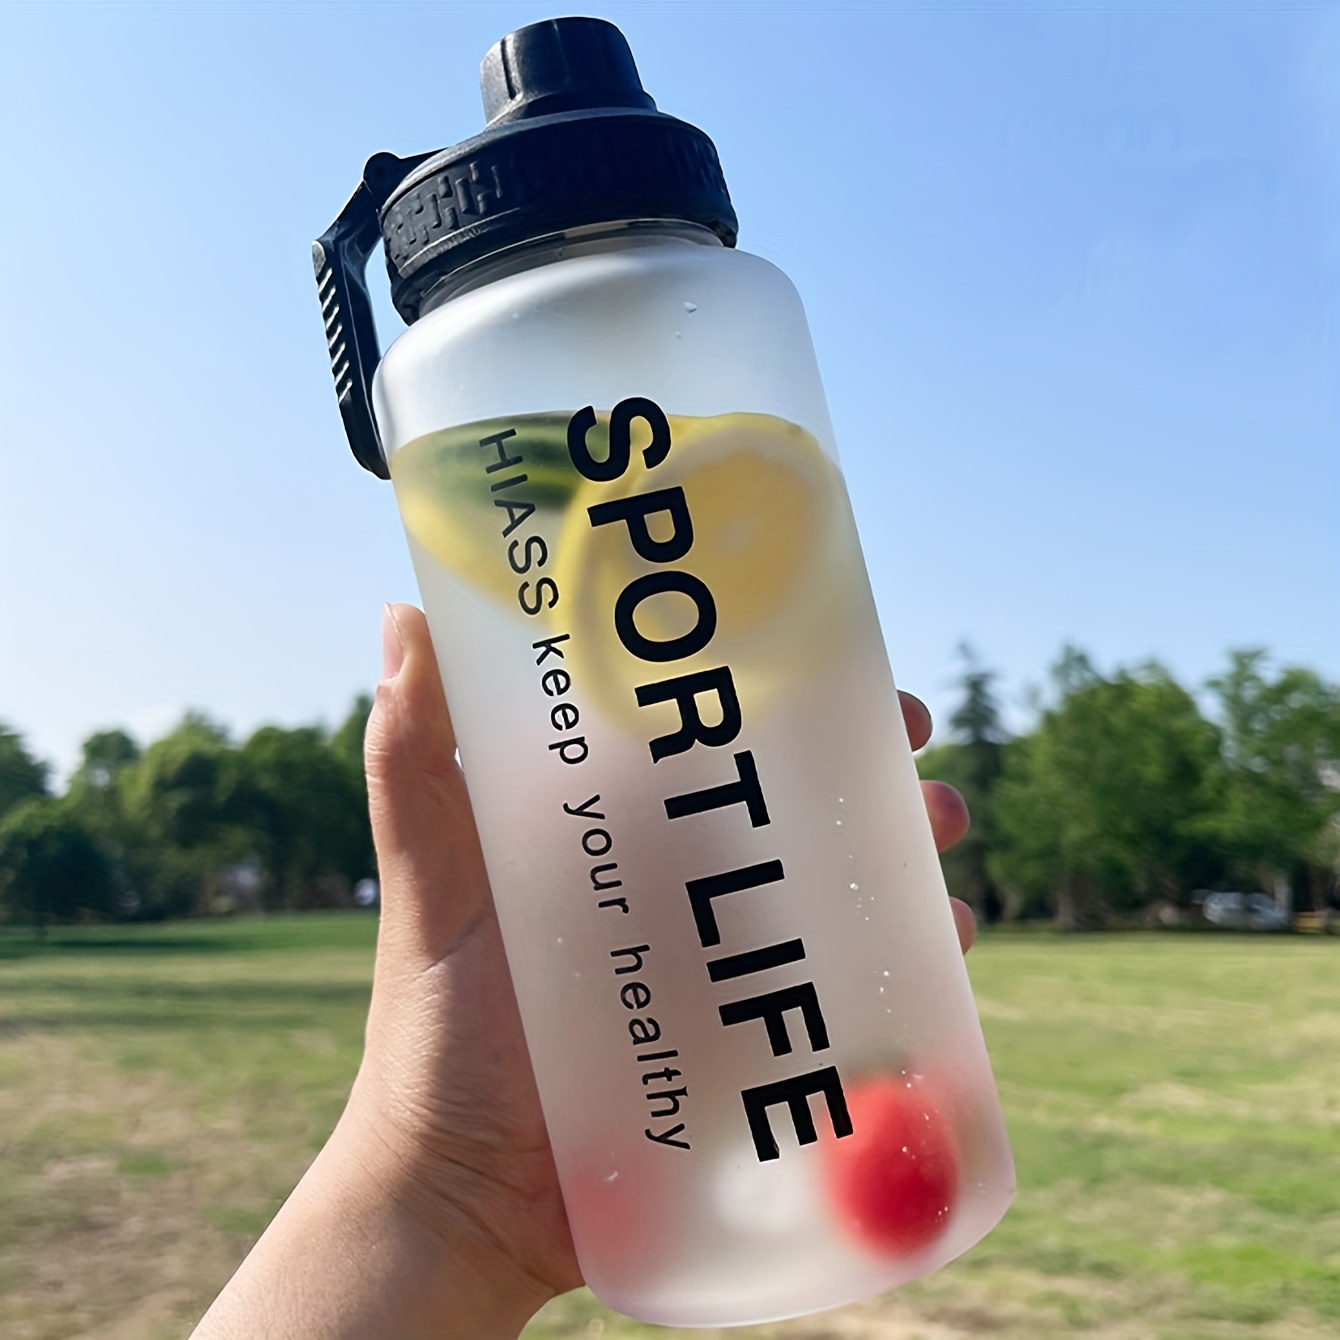 1Litre Water Bottle Sport Drinks Bottle 1L Water Bottle with Lock Cover & Leak Proof,for Gym, School,Cycling,Outdoor,Sports,Fitness& Office,Black